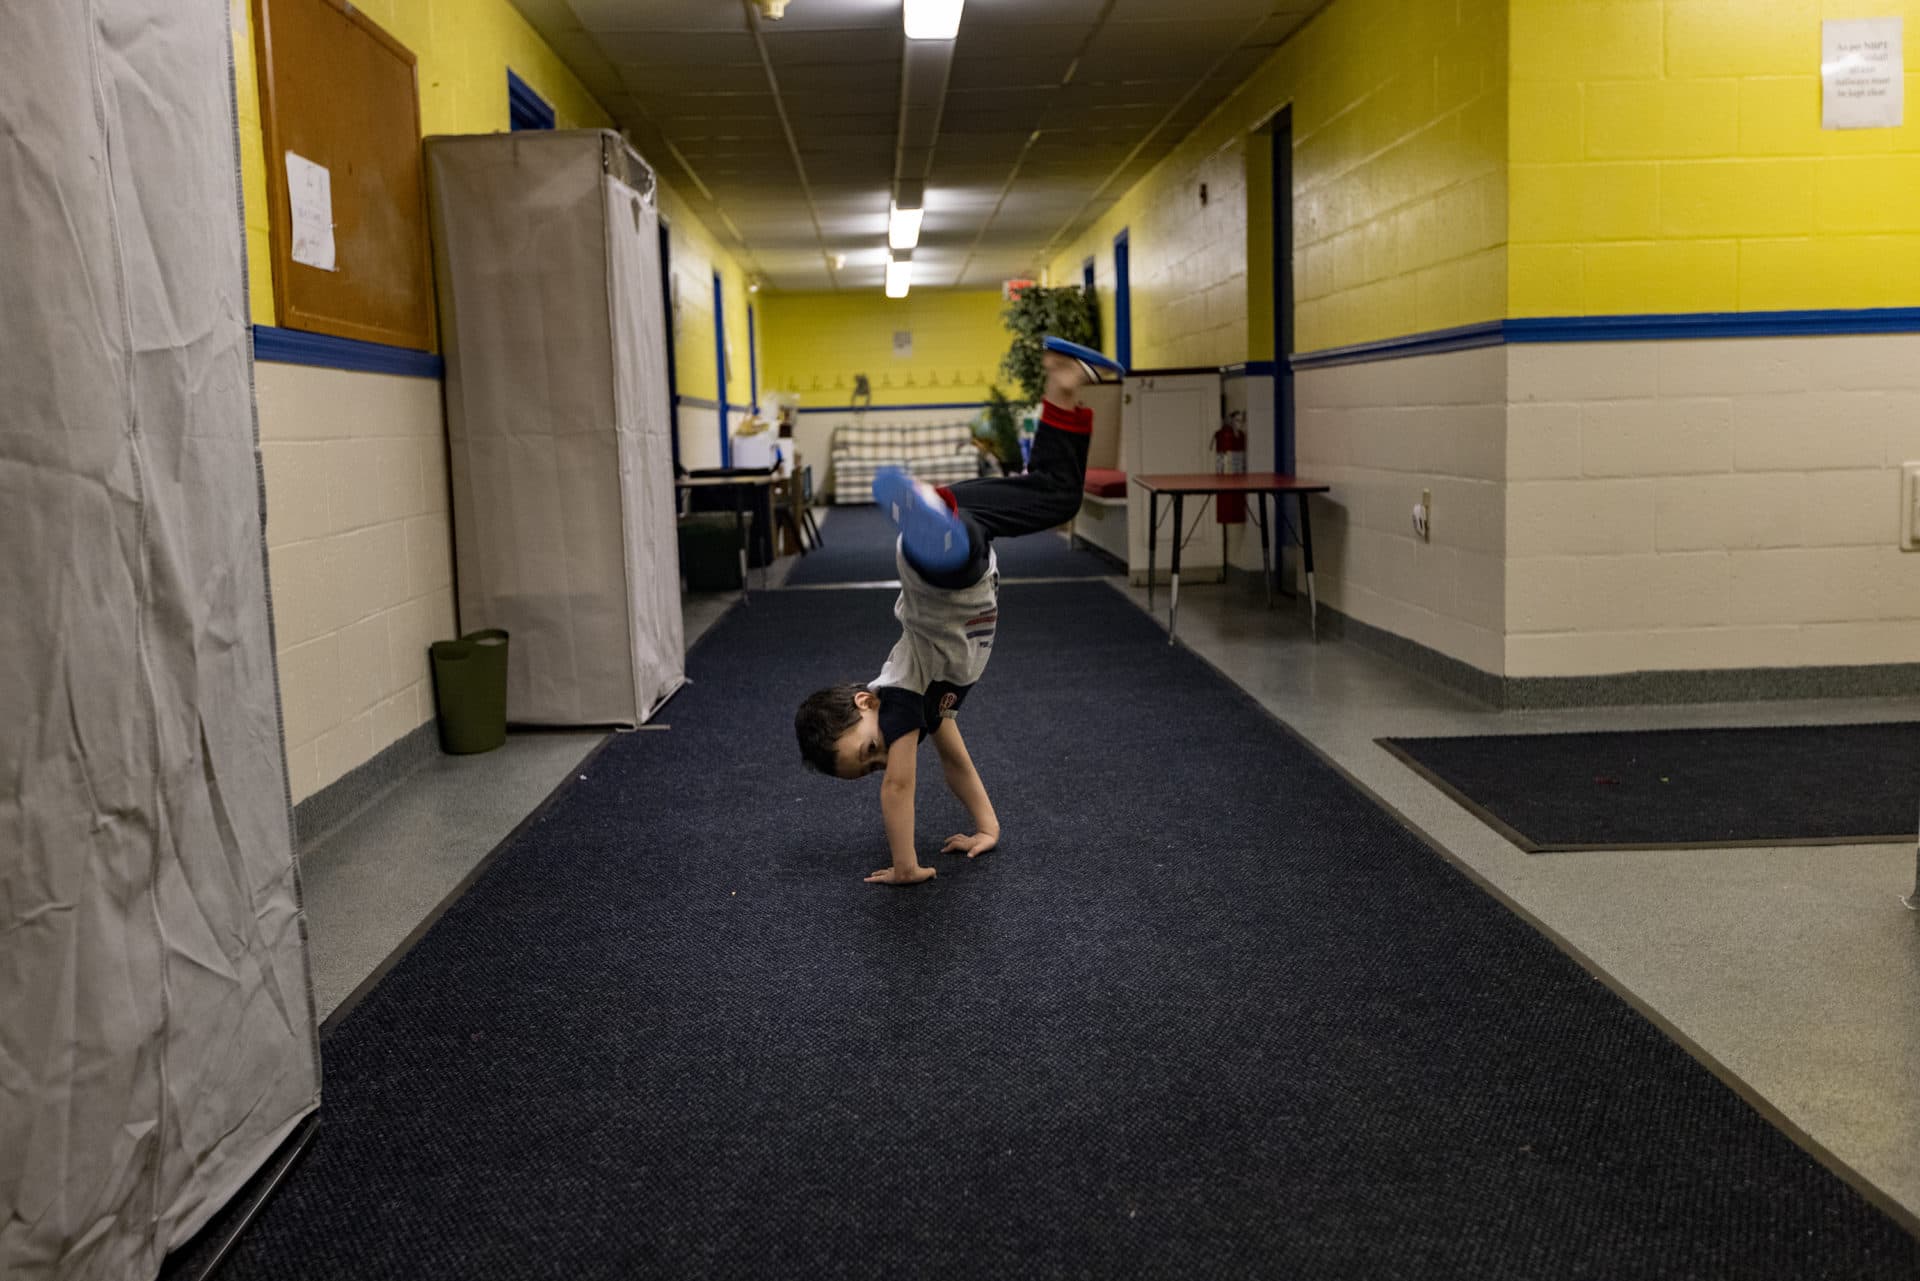 Sanjar, 5, does a cartwheel in the hallway of the basement at St. Paul's Episcopal Church in Newburyport. (Jesse Costa/WBUR)